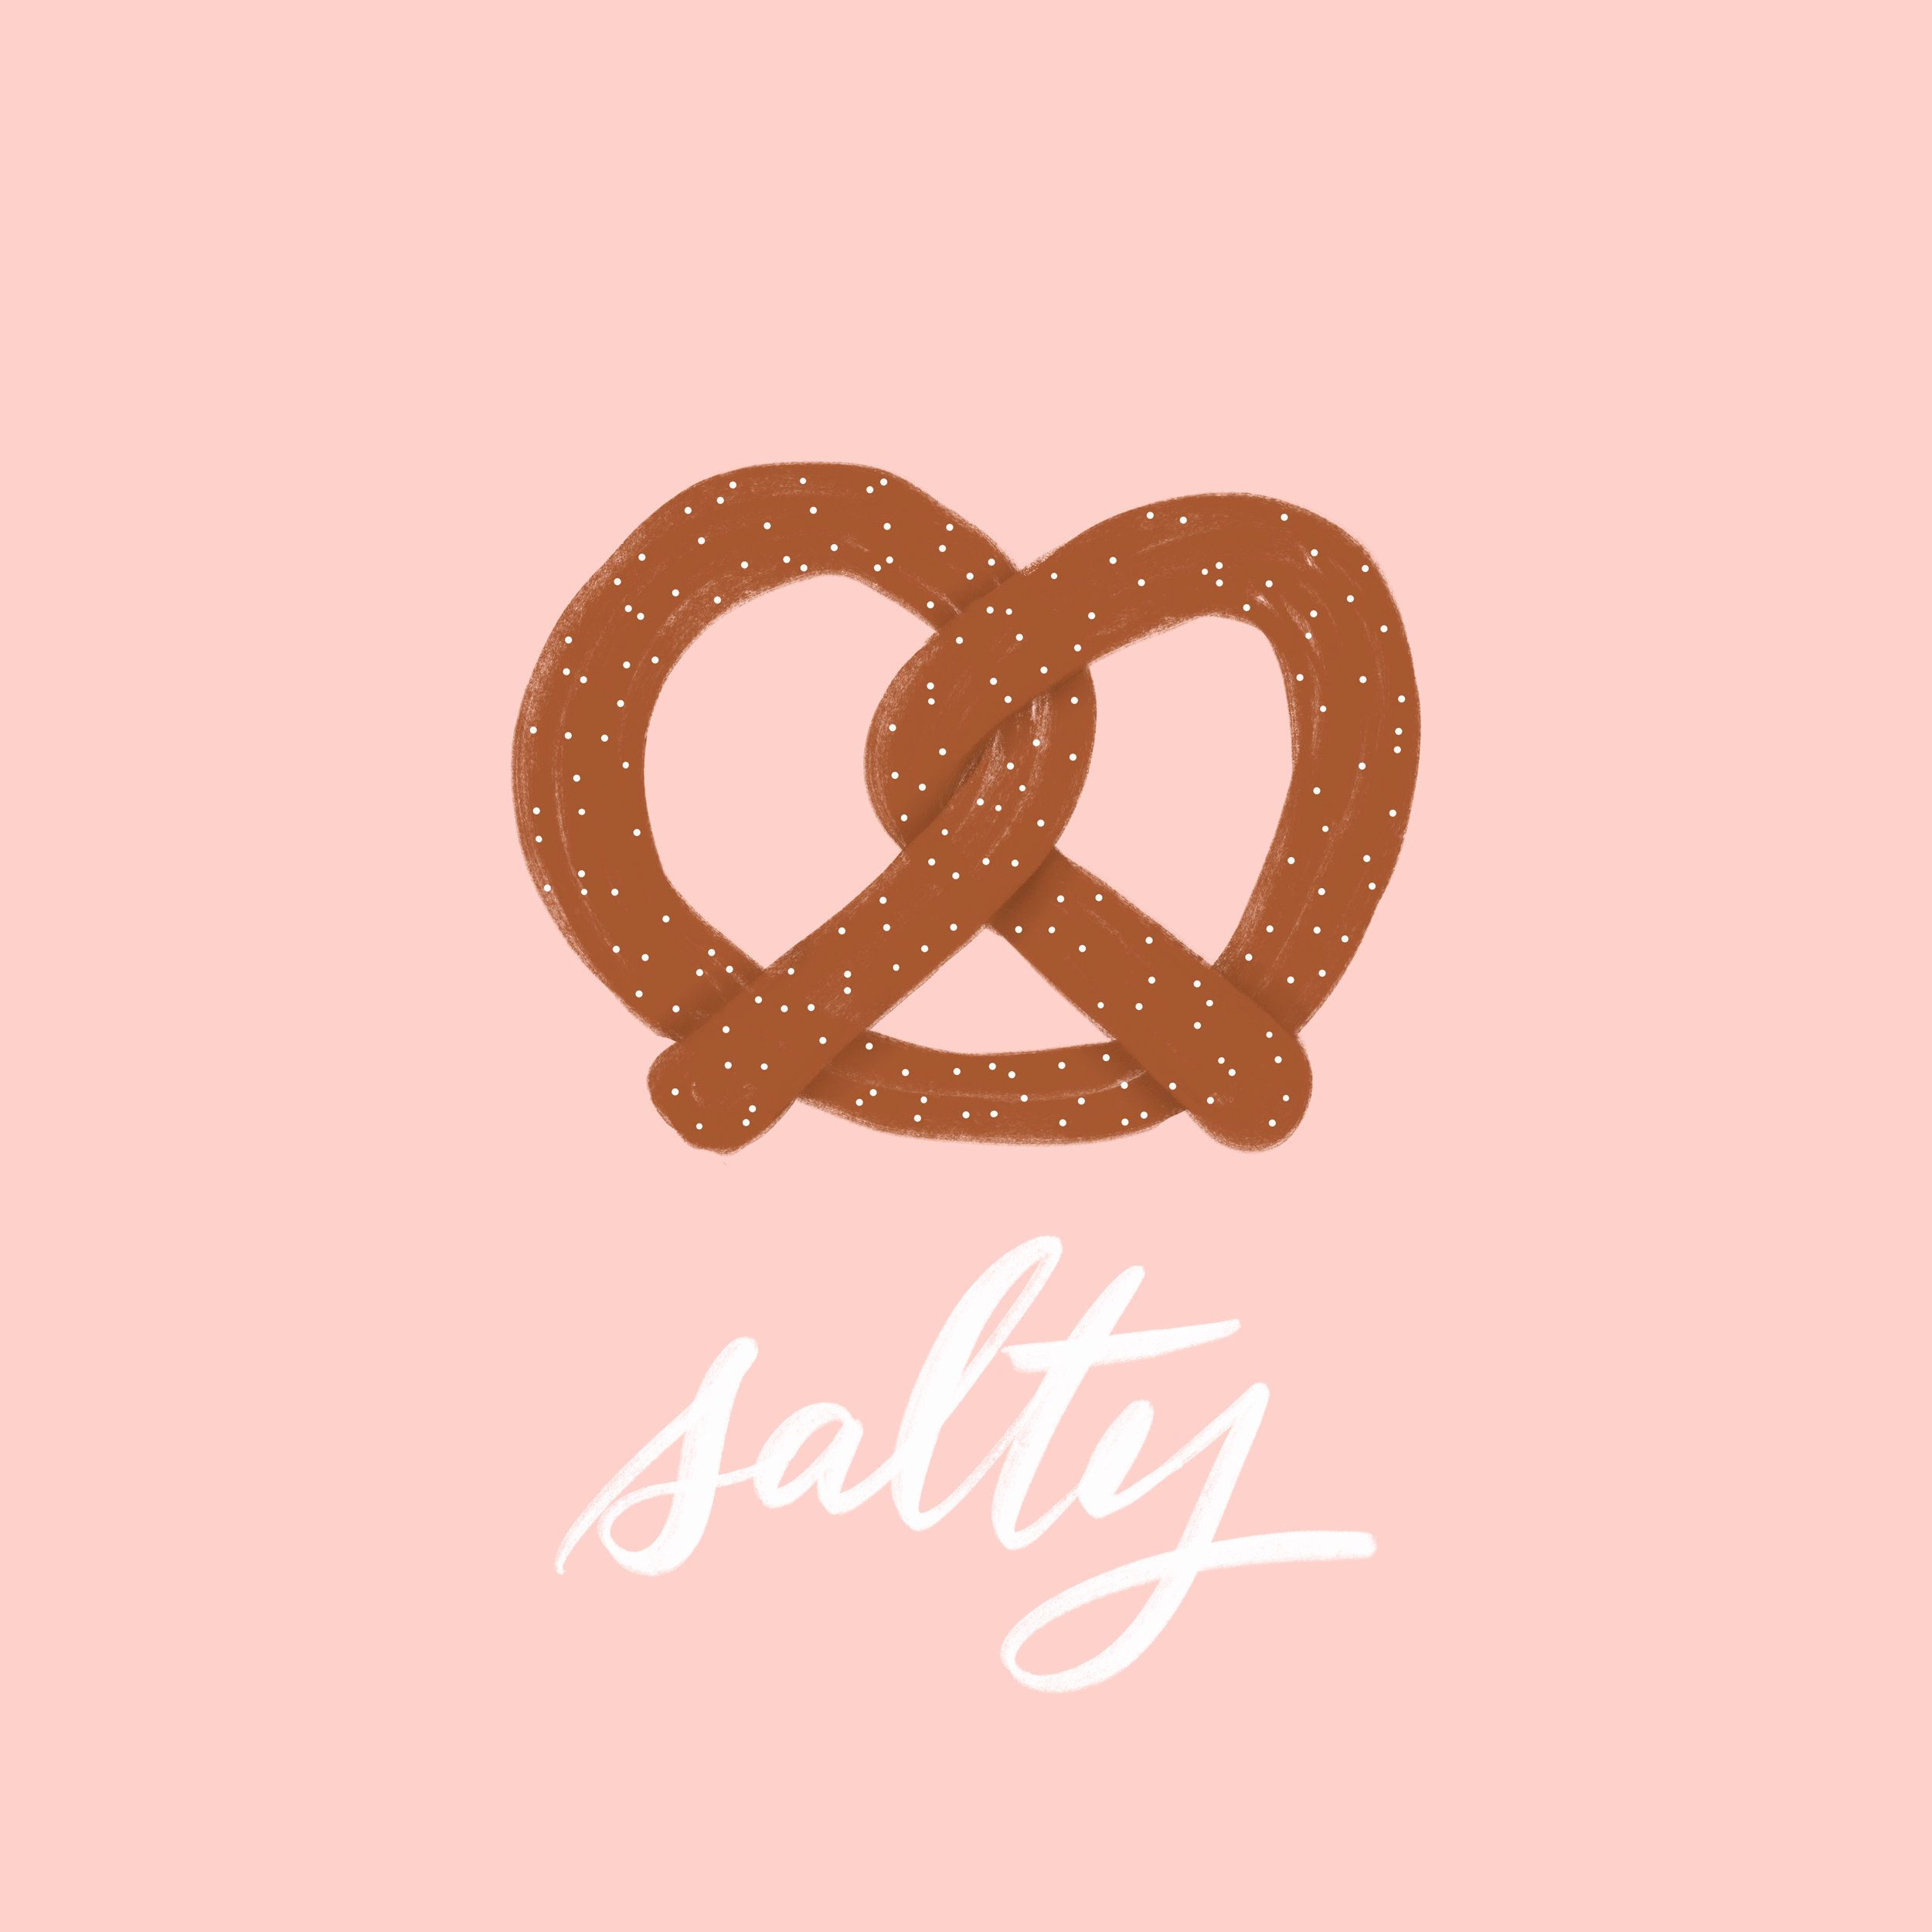 salty pretzel illustration. Illustration, Food illustrations, Animal illustration